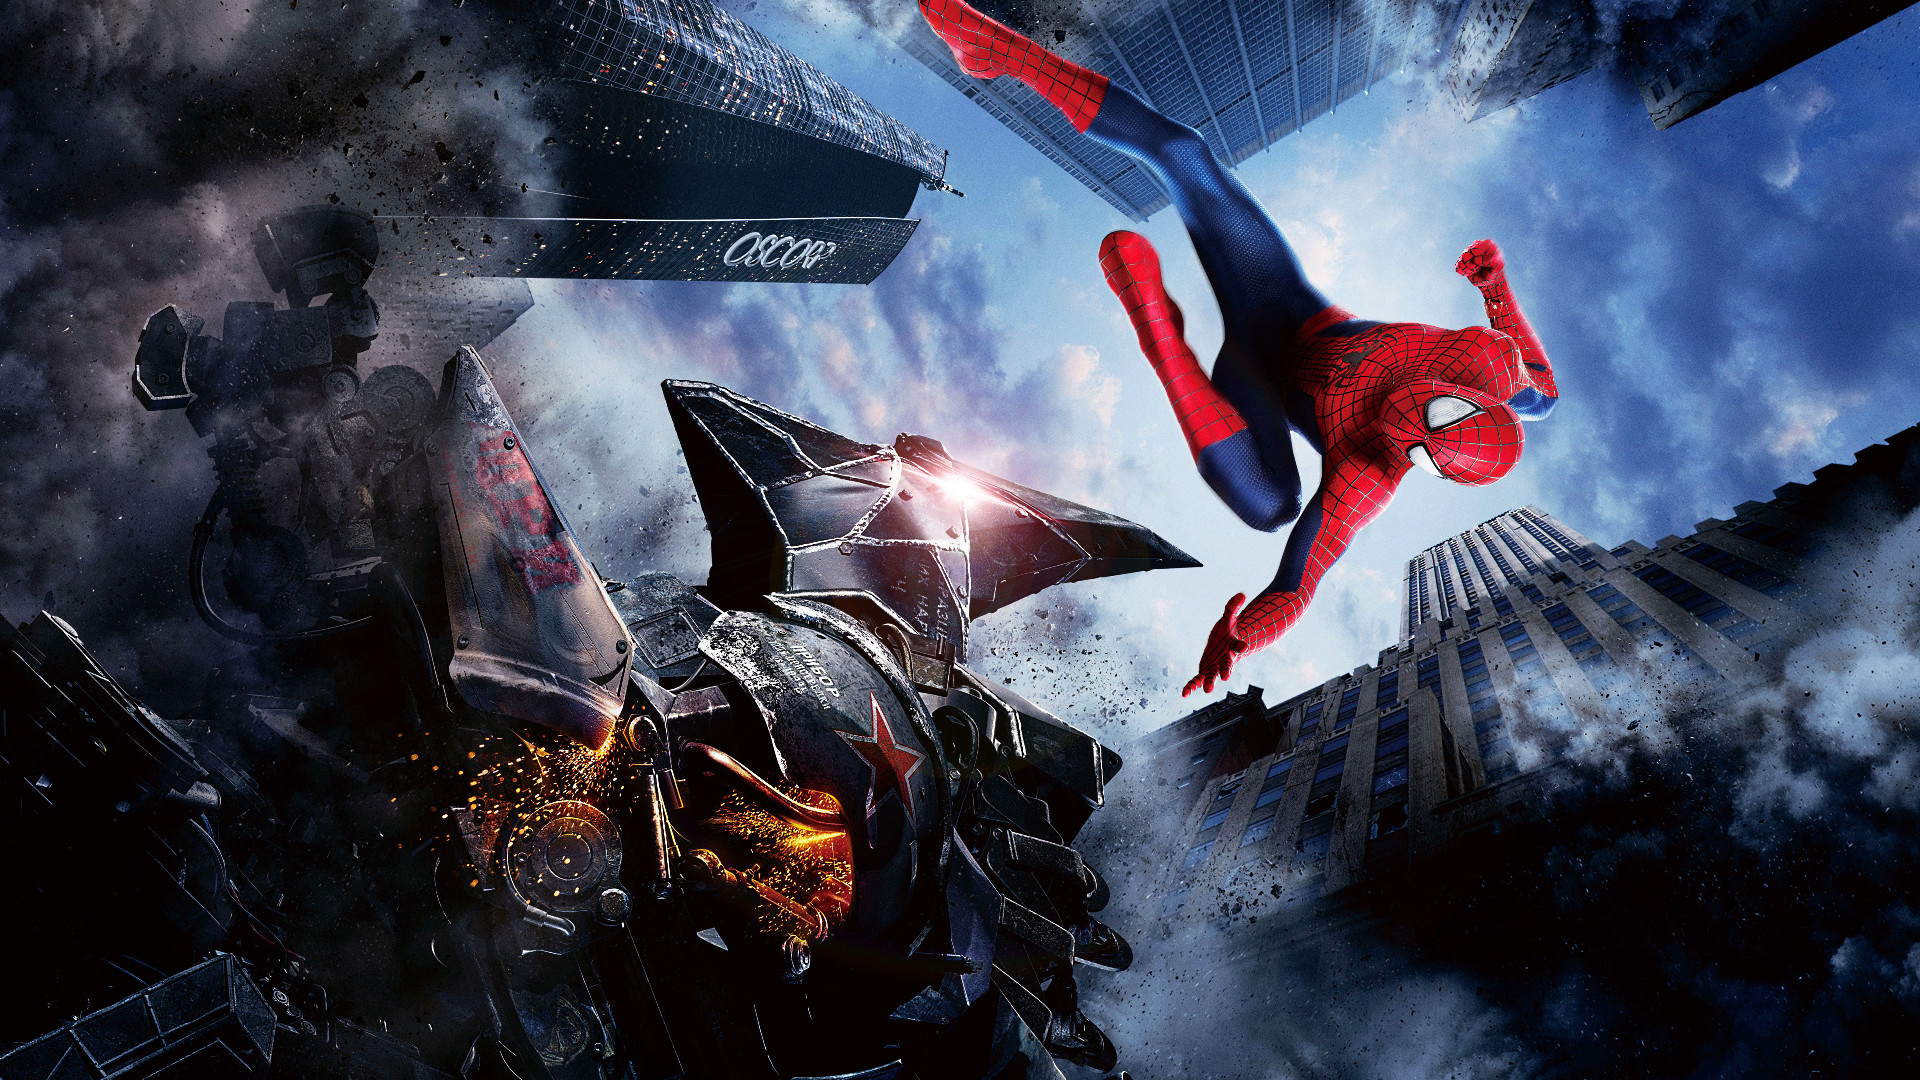 1920x1080 ProfessorAdagio 235 10 The Amazing Spider-Man 2 Movie Poster Wallpaper 3 by  ProfessorAdagio